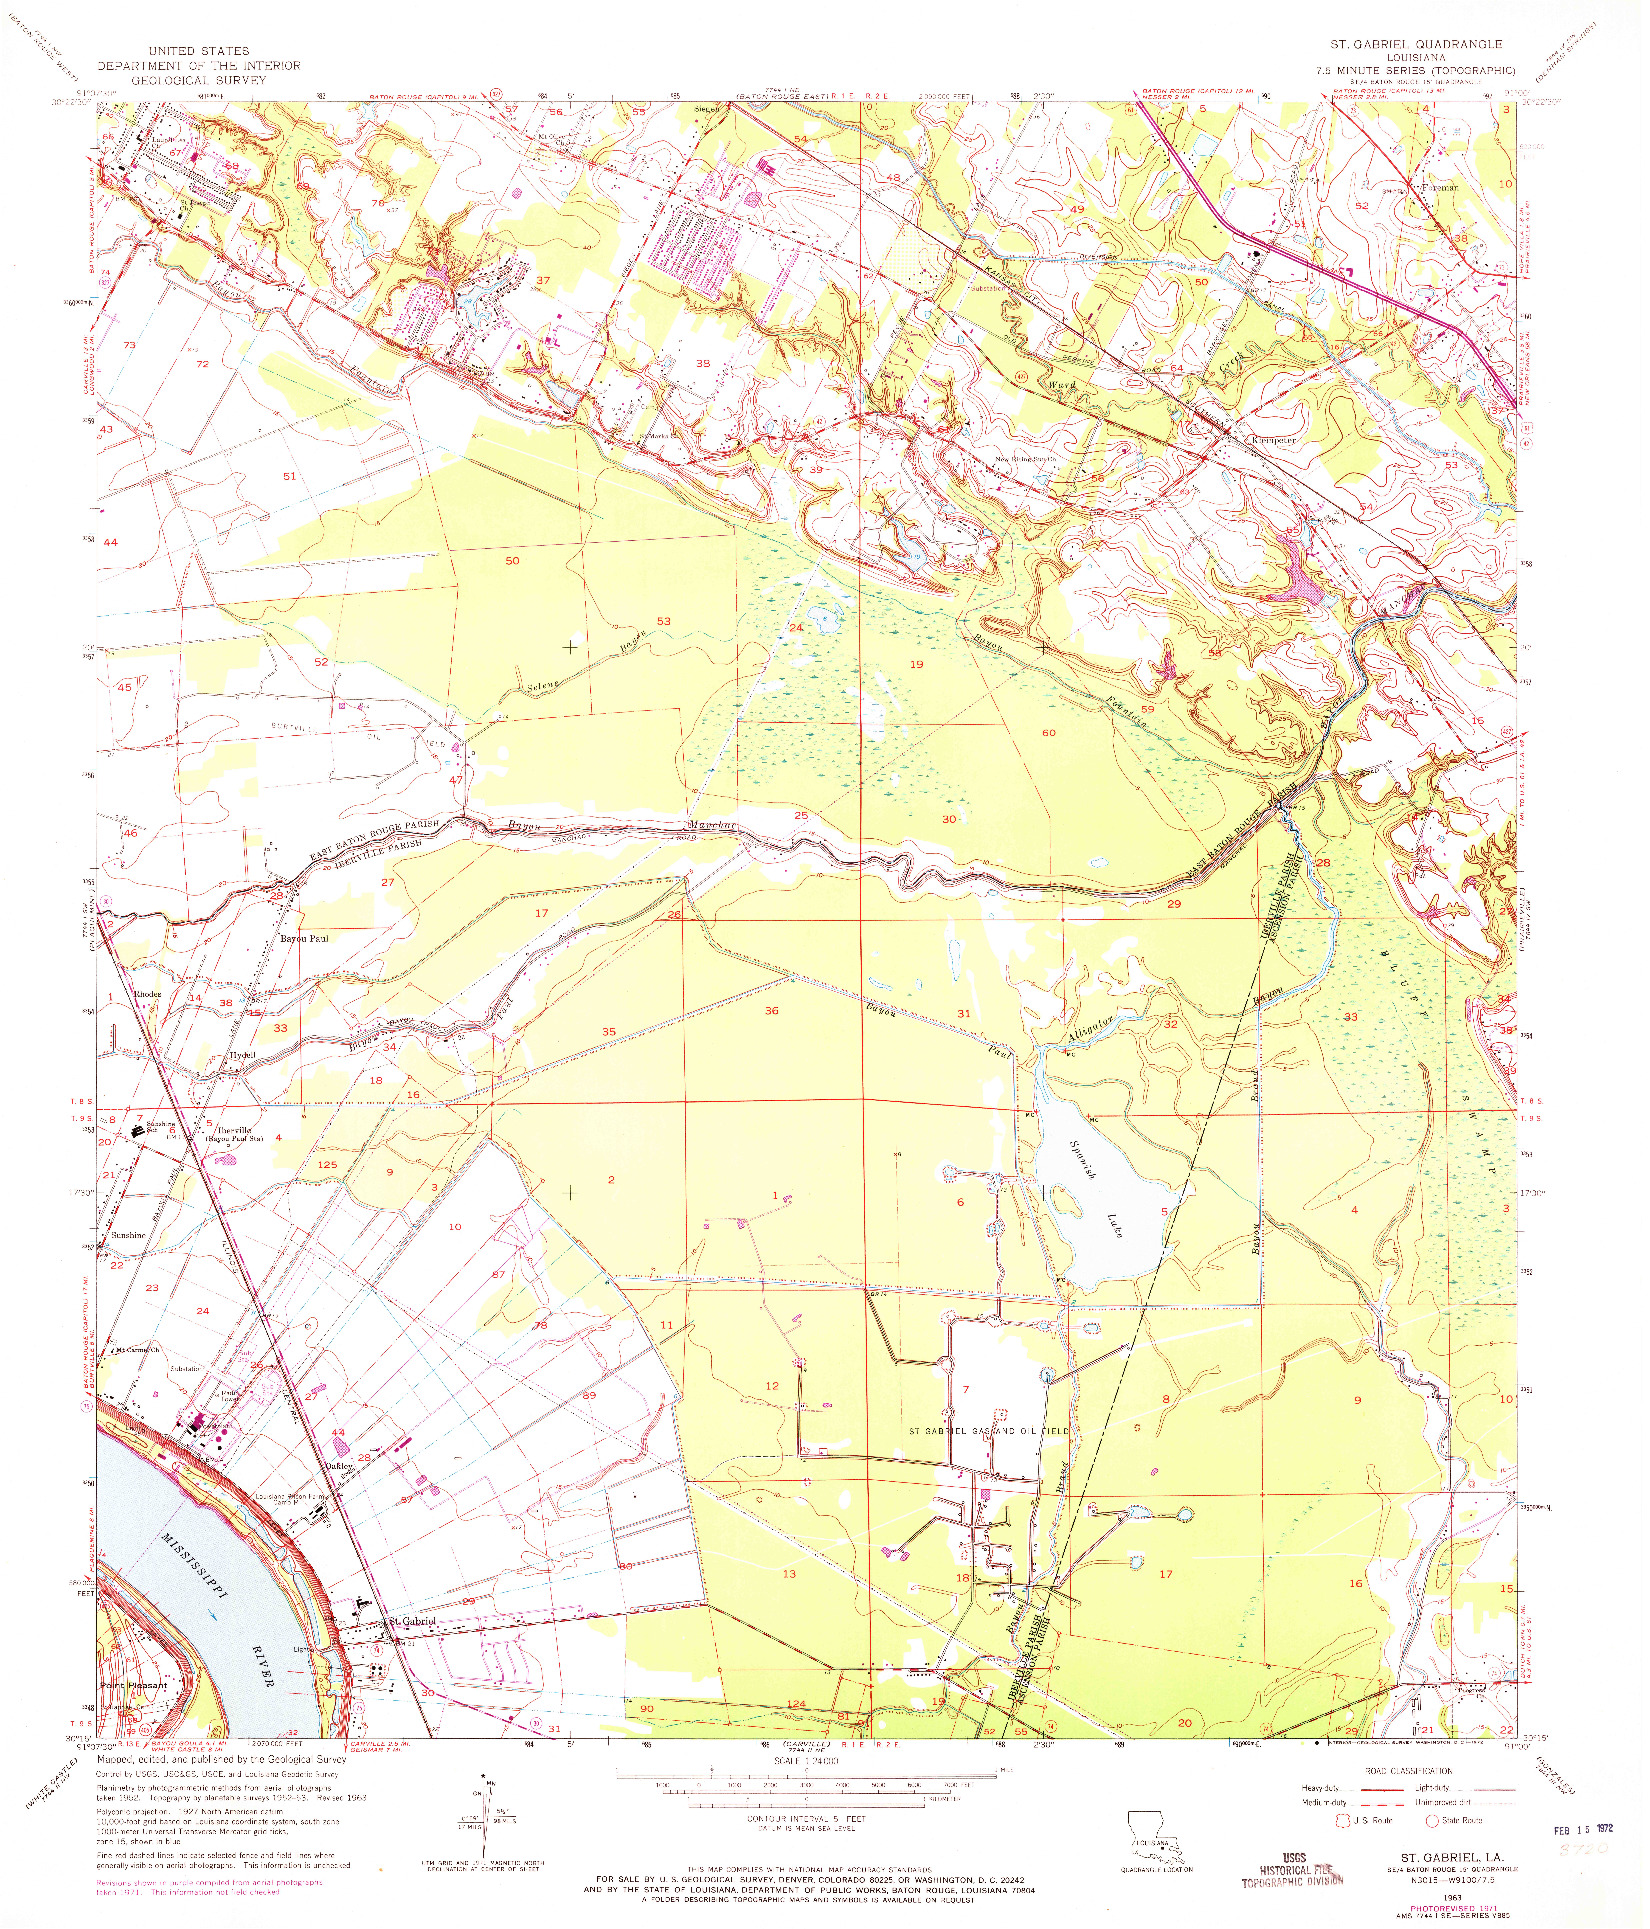 USGS 1:24000-SCALE QUADRANGLE FOR ST. GABRIEL, LA 1963